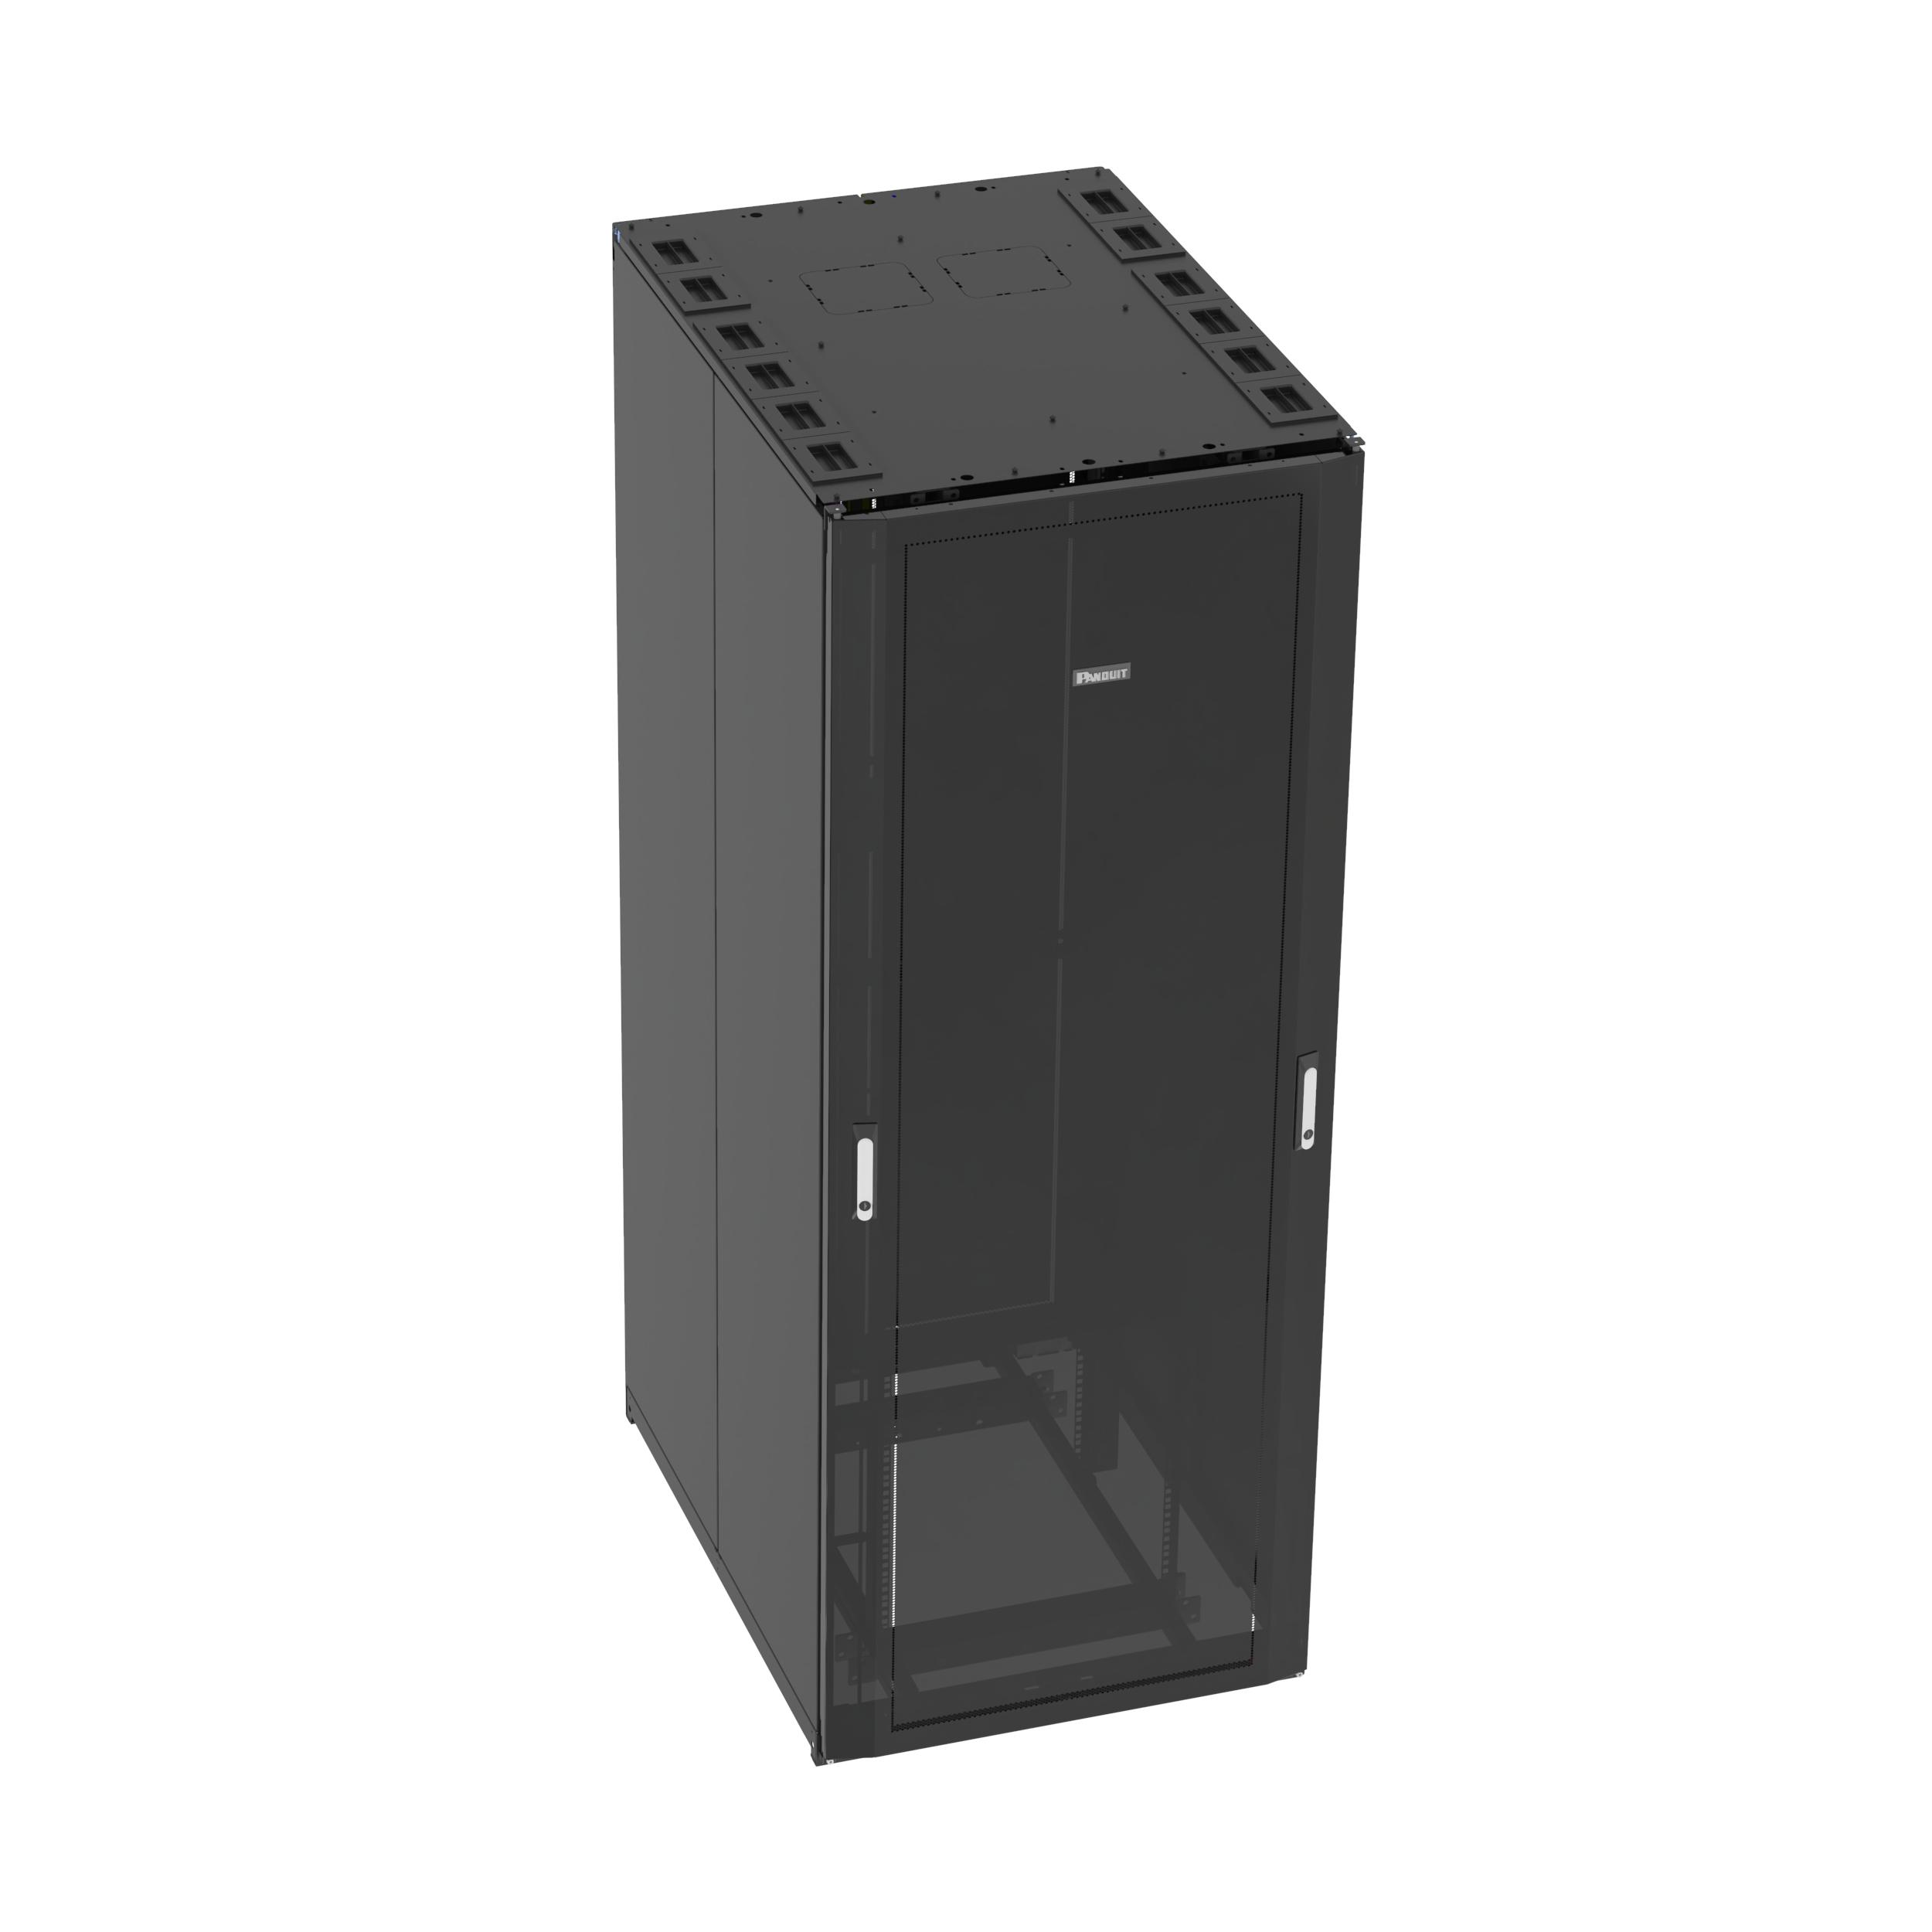 Panduit N8512B Net-Access™ N-Type Network Cabinet, 45 RU, Black